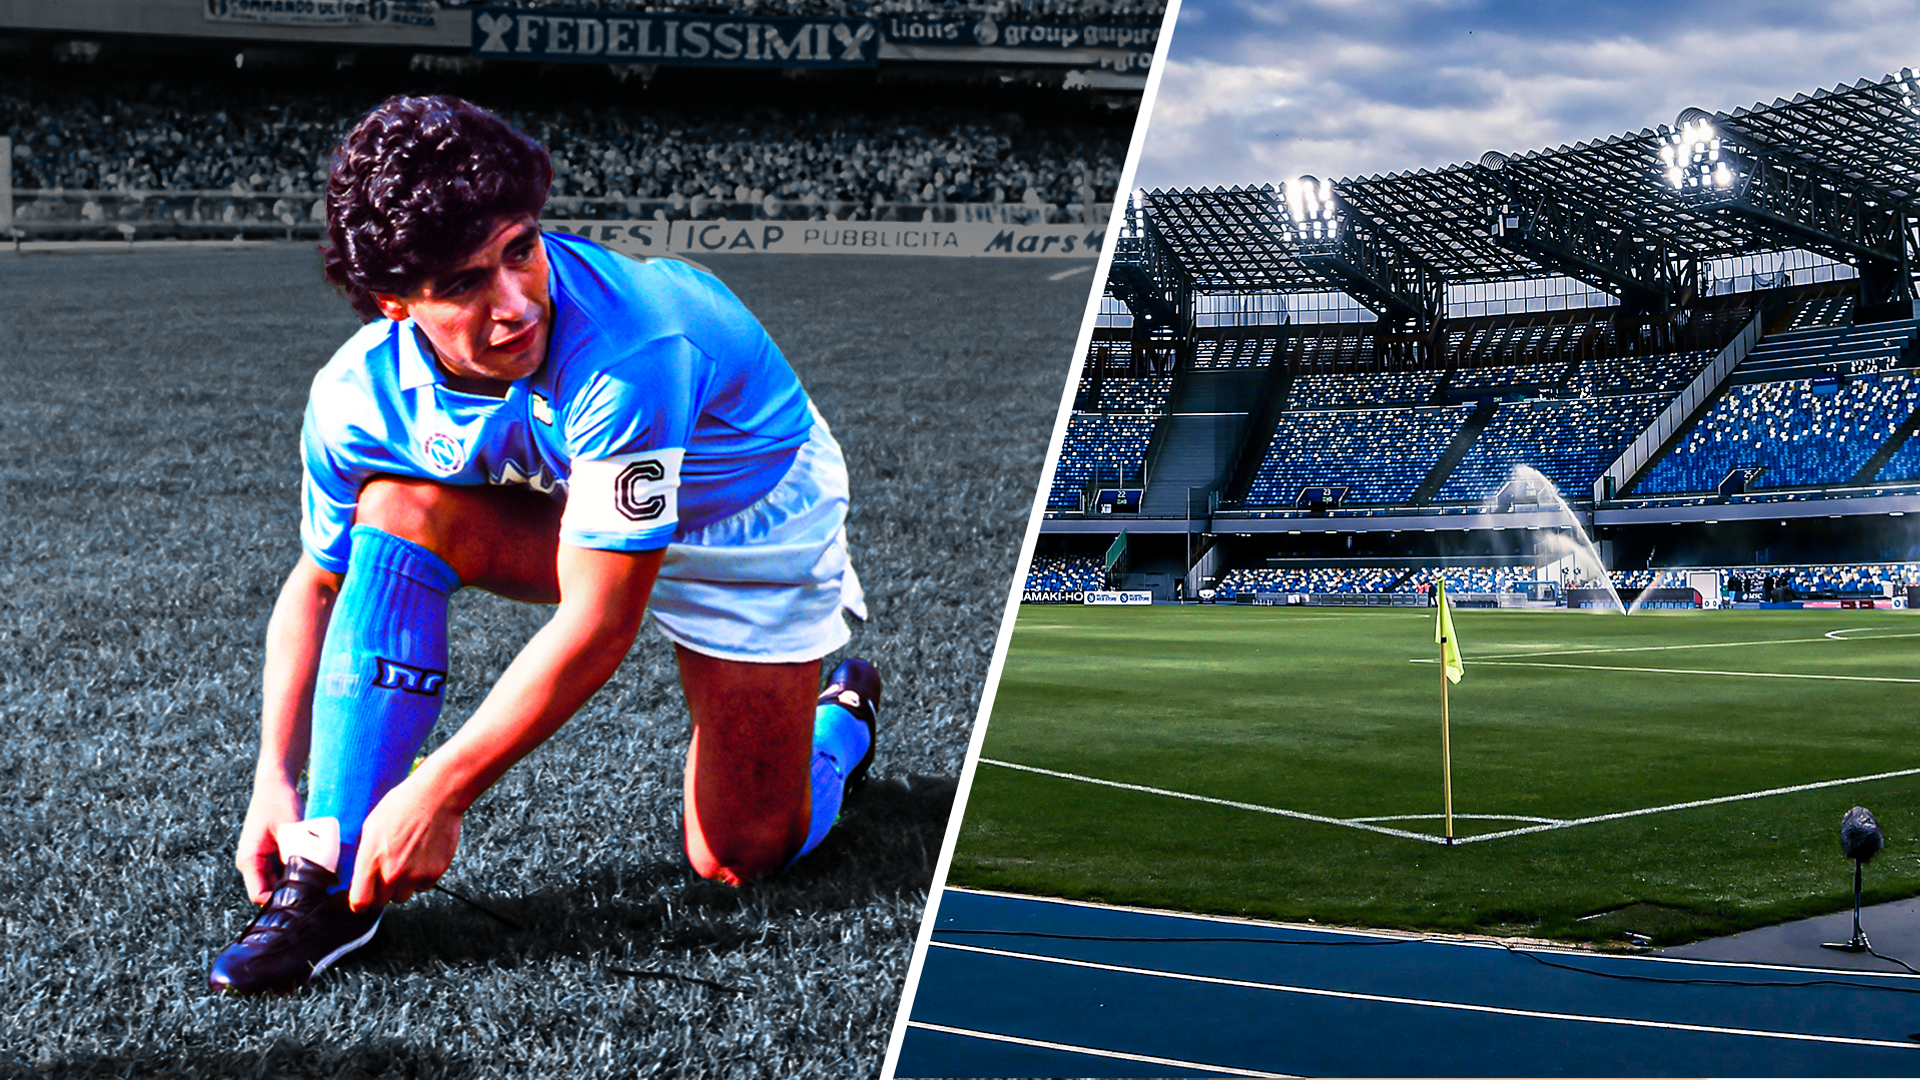 Napoli consider renaming stadium after Maradona